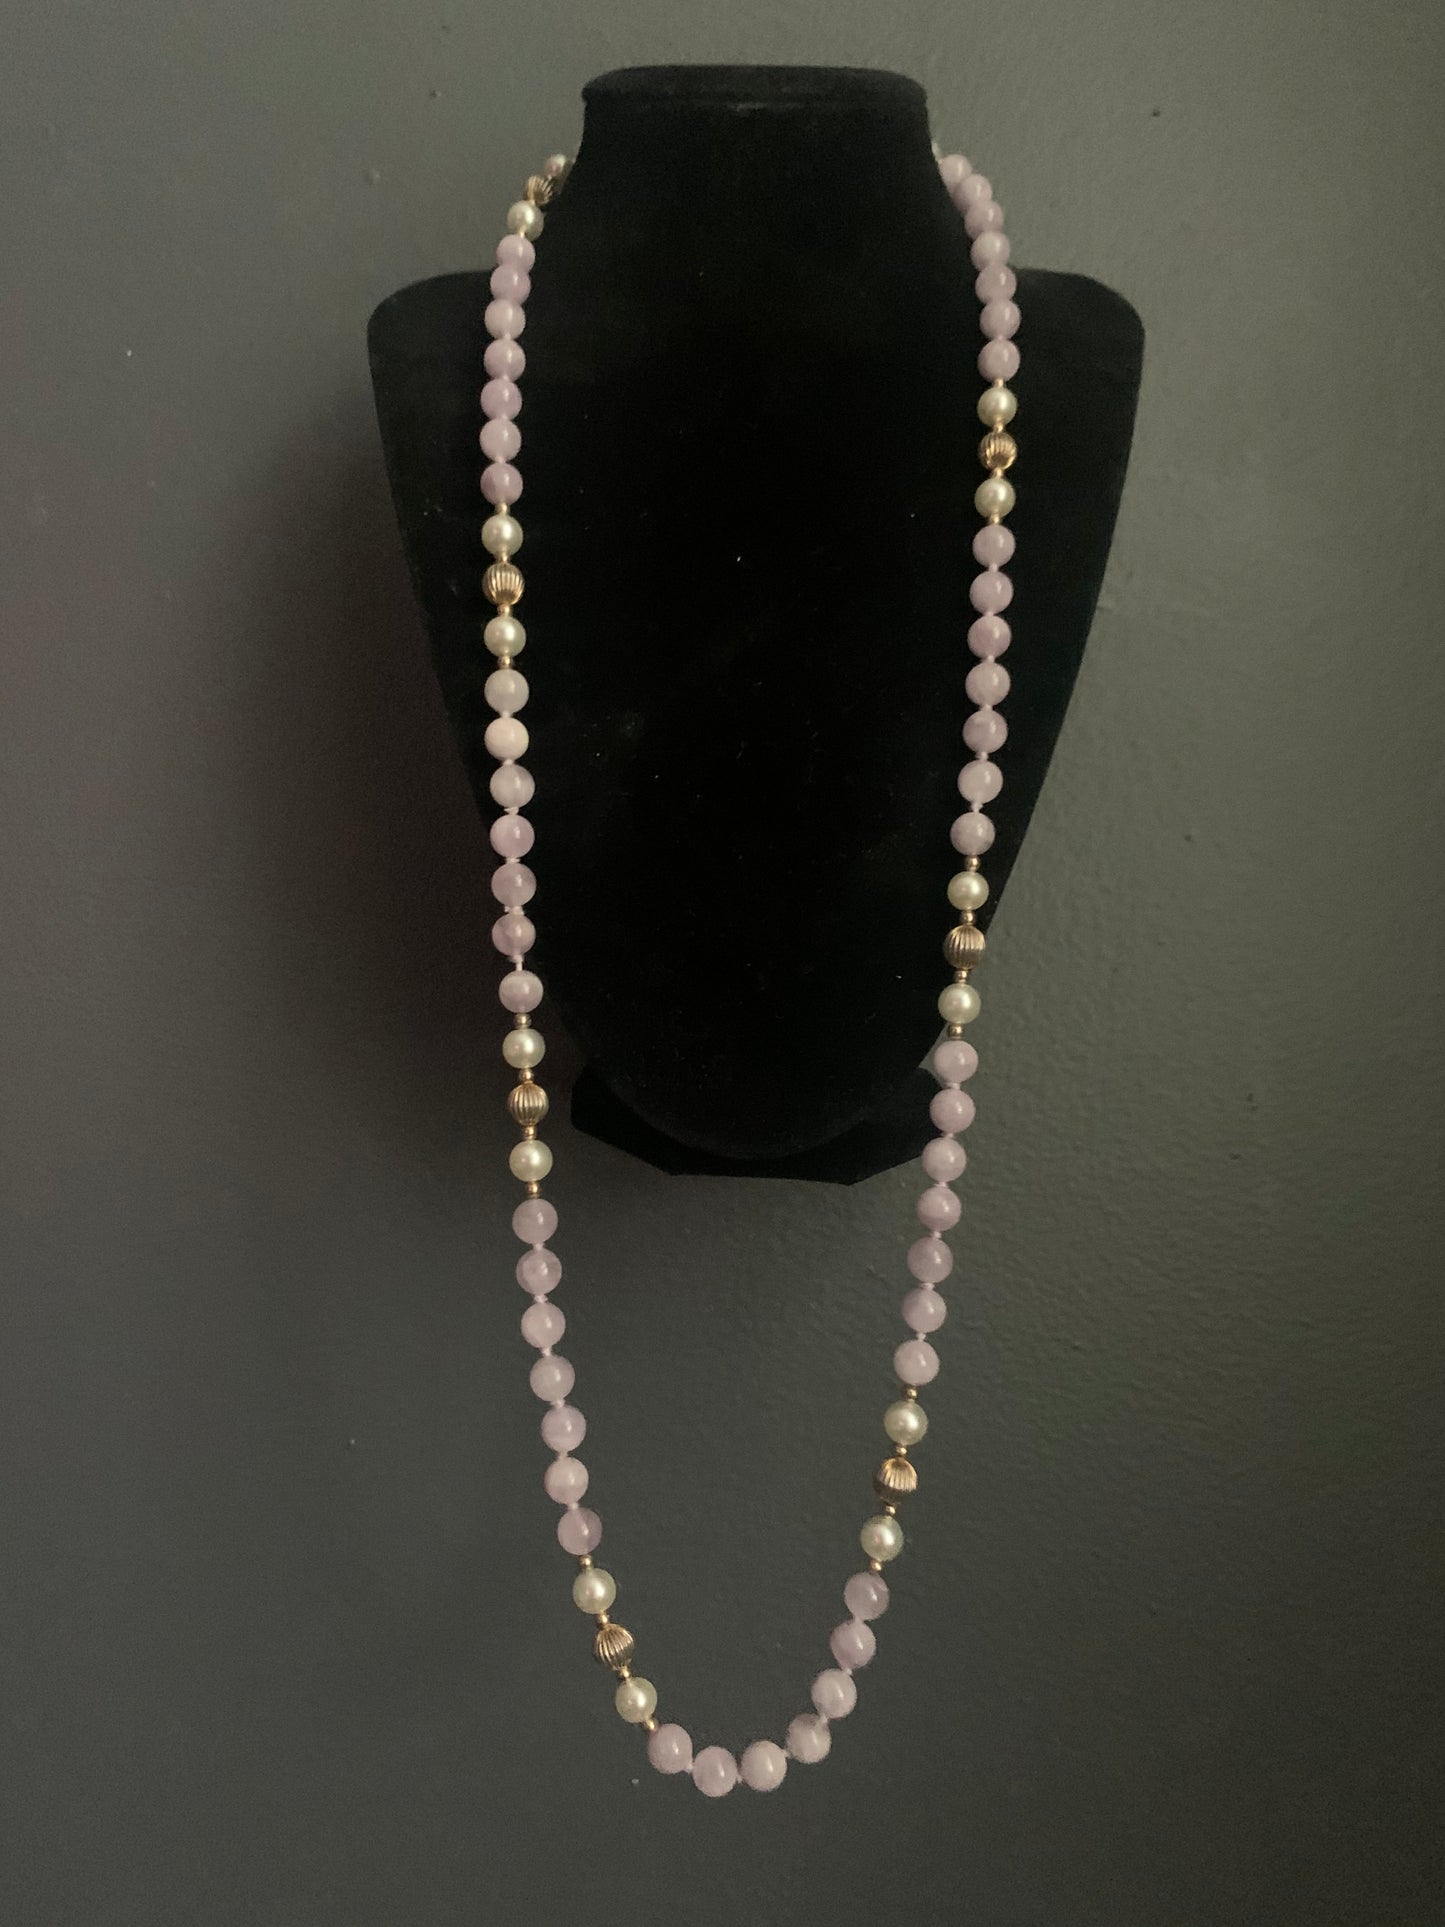 A vintage lavender jade necklace